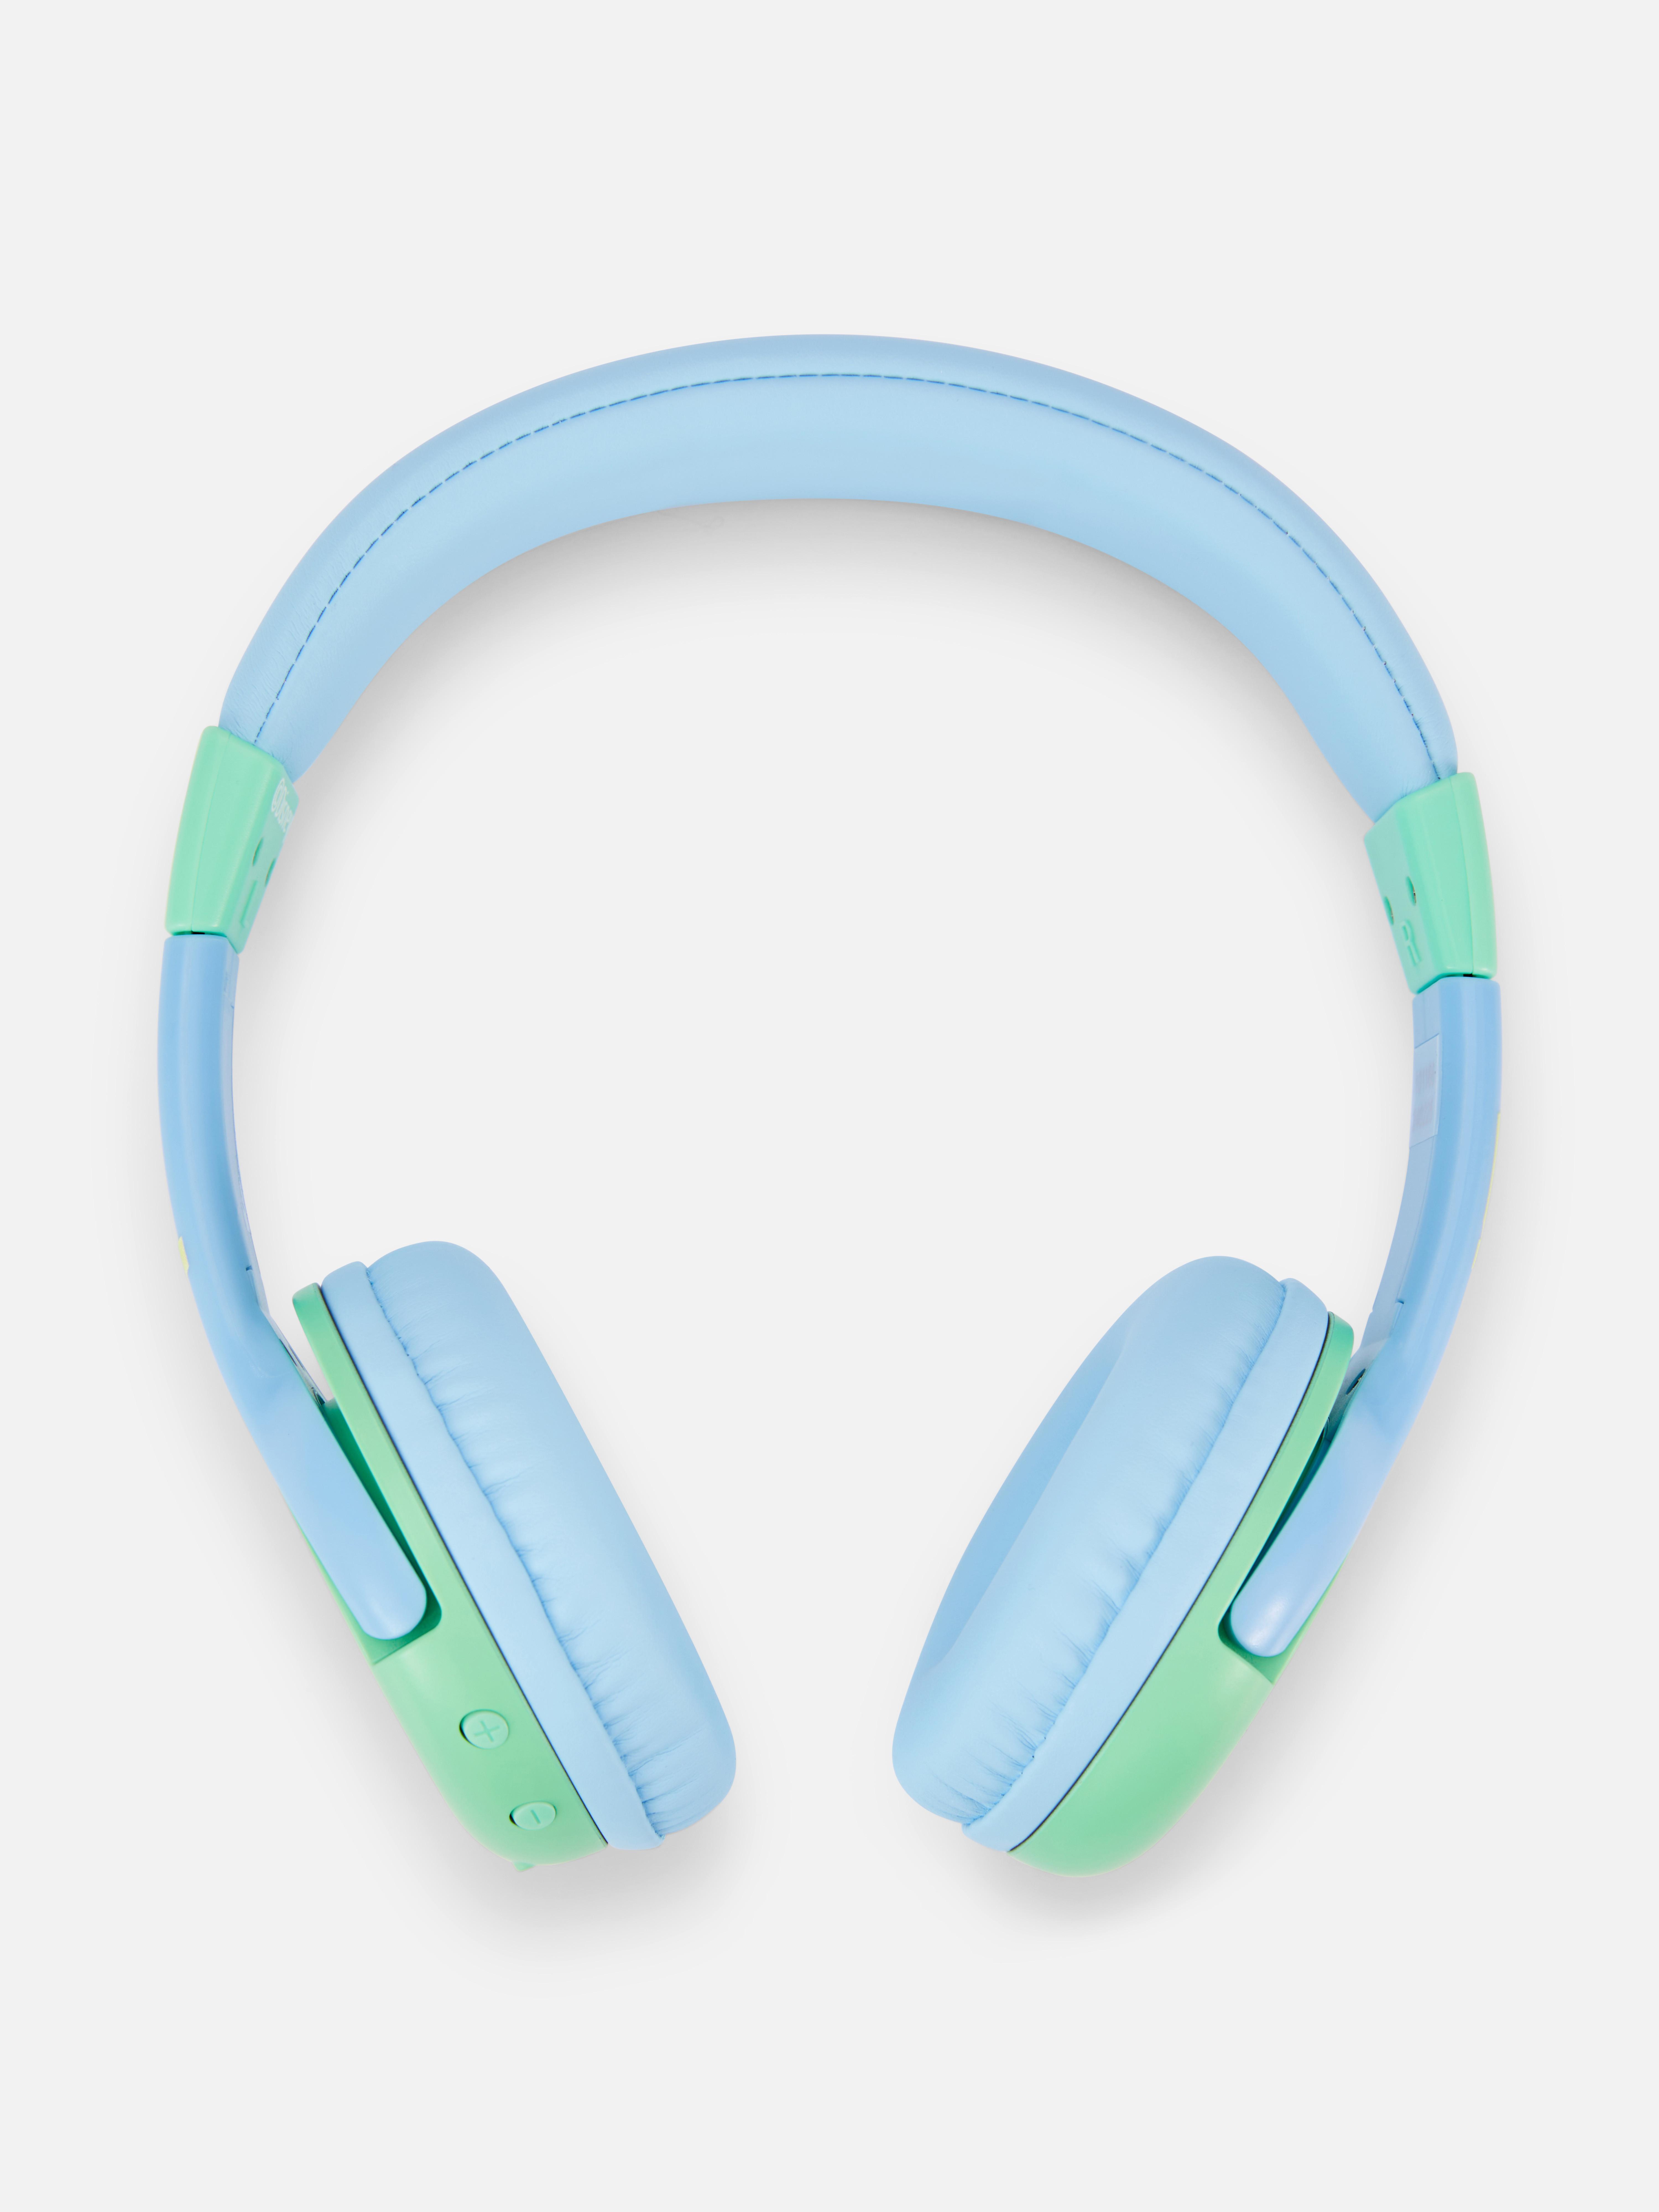 Disney’s Lilo & Stitch Light Up Wireless Headphones